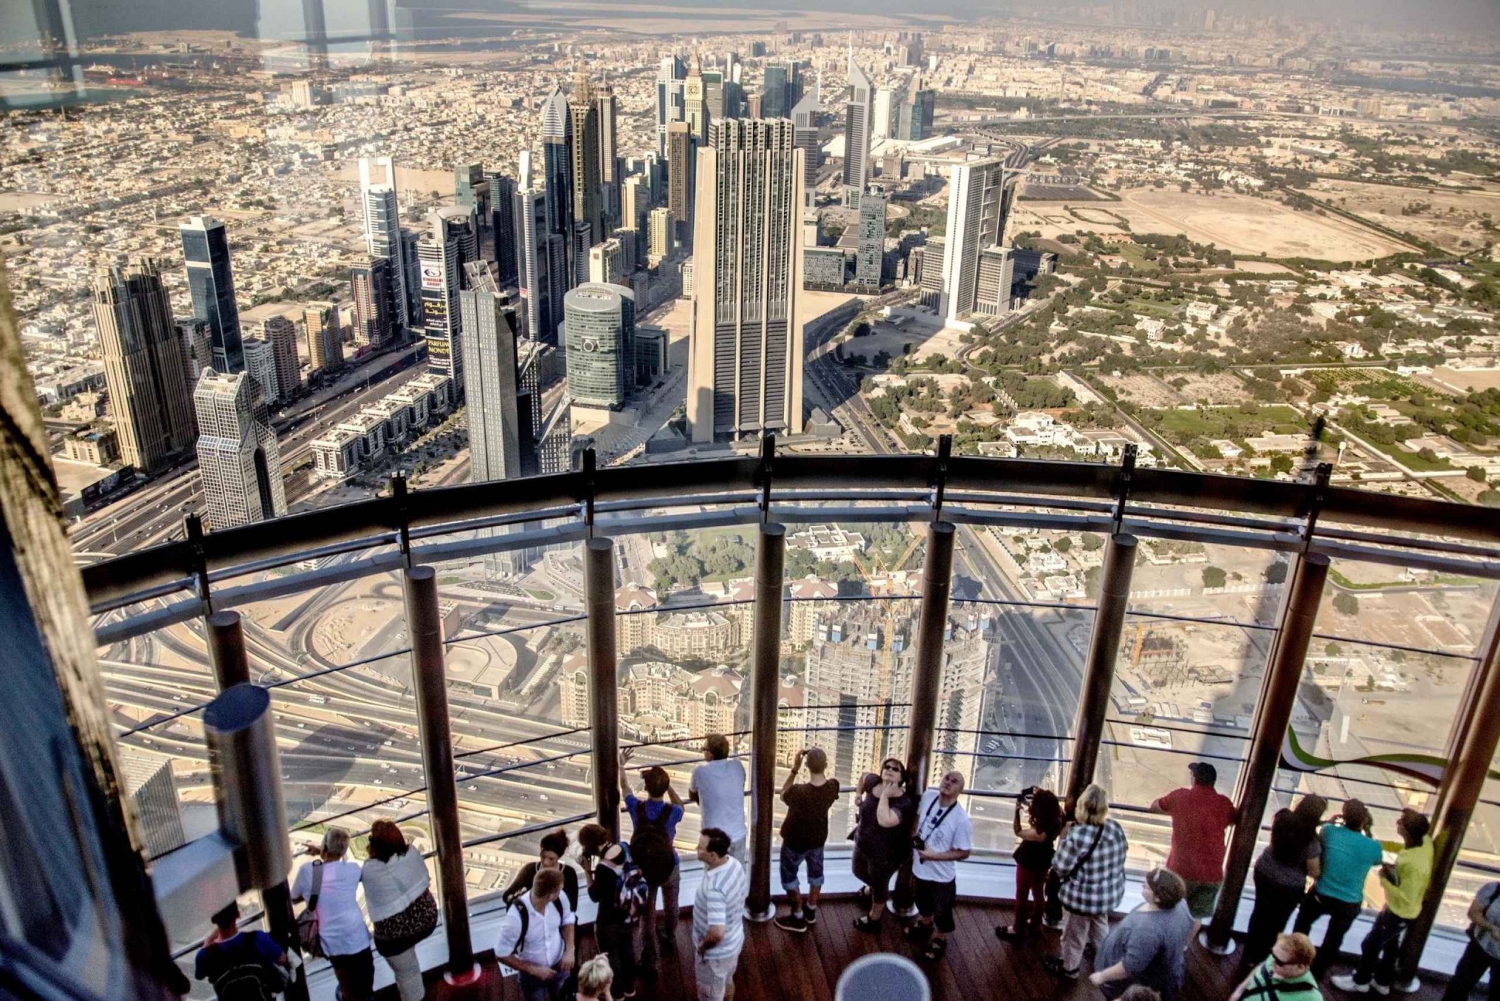 Dubai Burj Khalifa Tickets & Tour: Level 124, 125 and 148